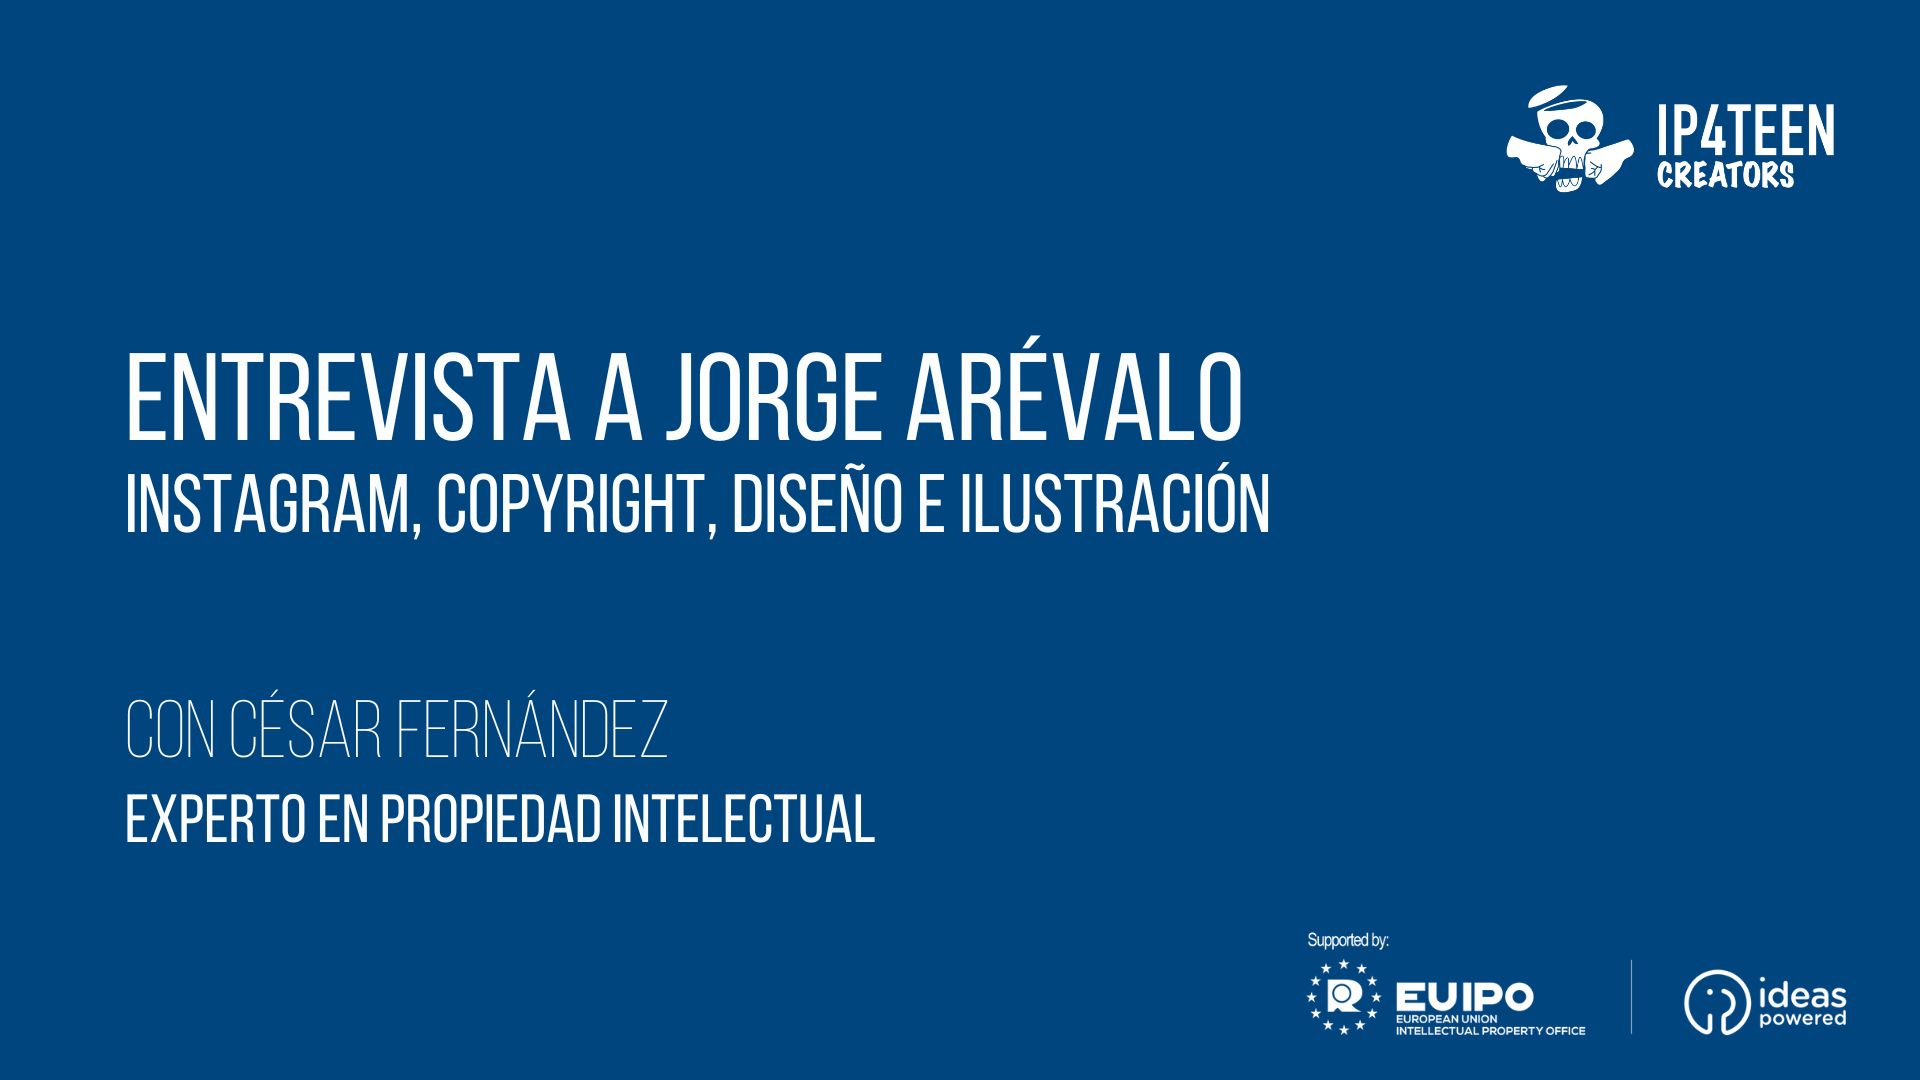 Entrevista Jorge Arevalo Instagram Diseño, Copyright, Ilustracion